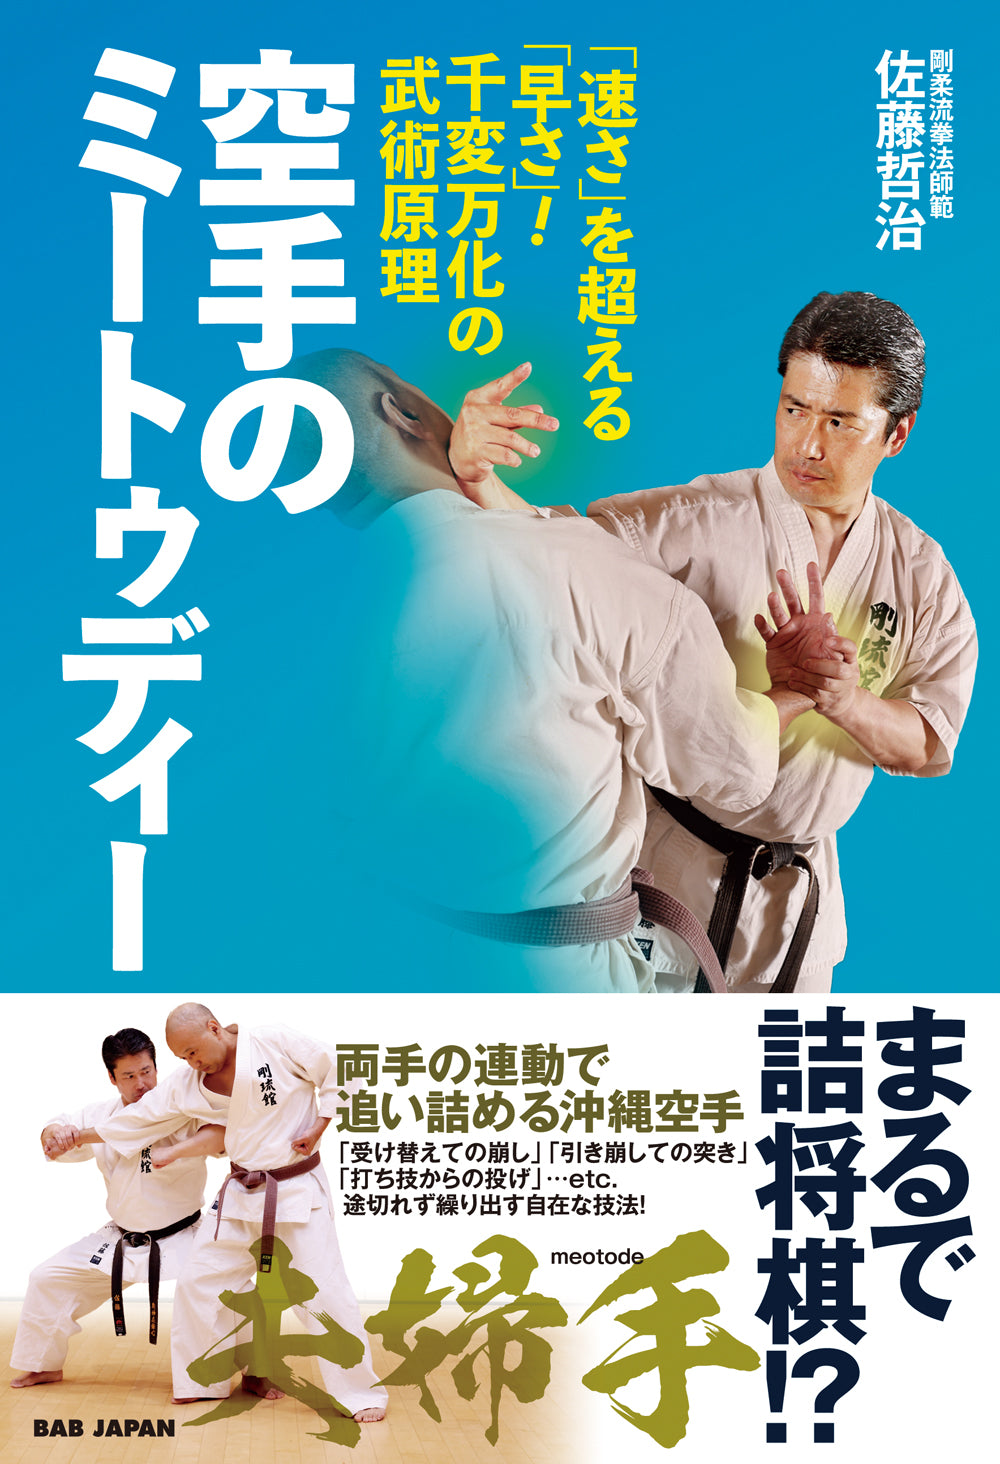 Meotodo of Karate Book by Tetsuji Sato - Budovideos Inc